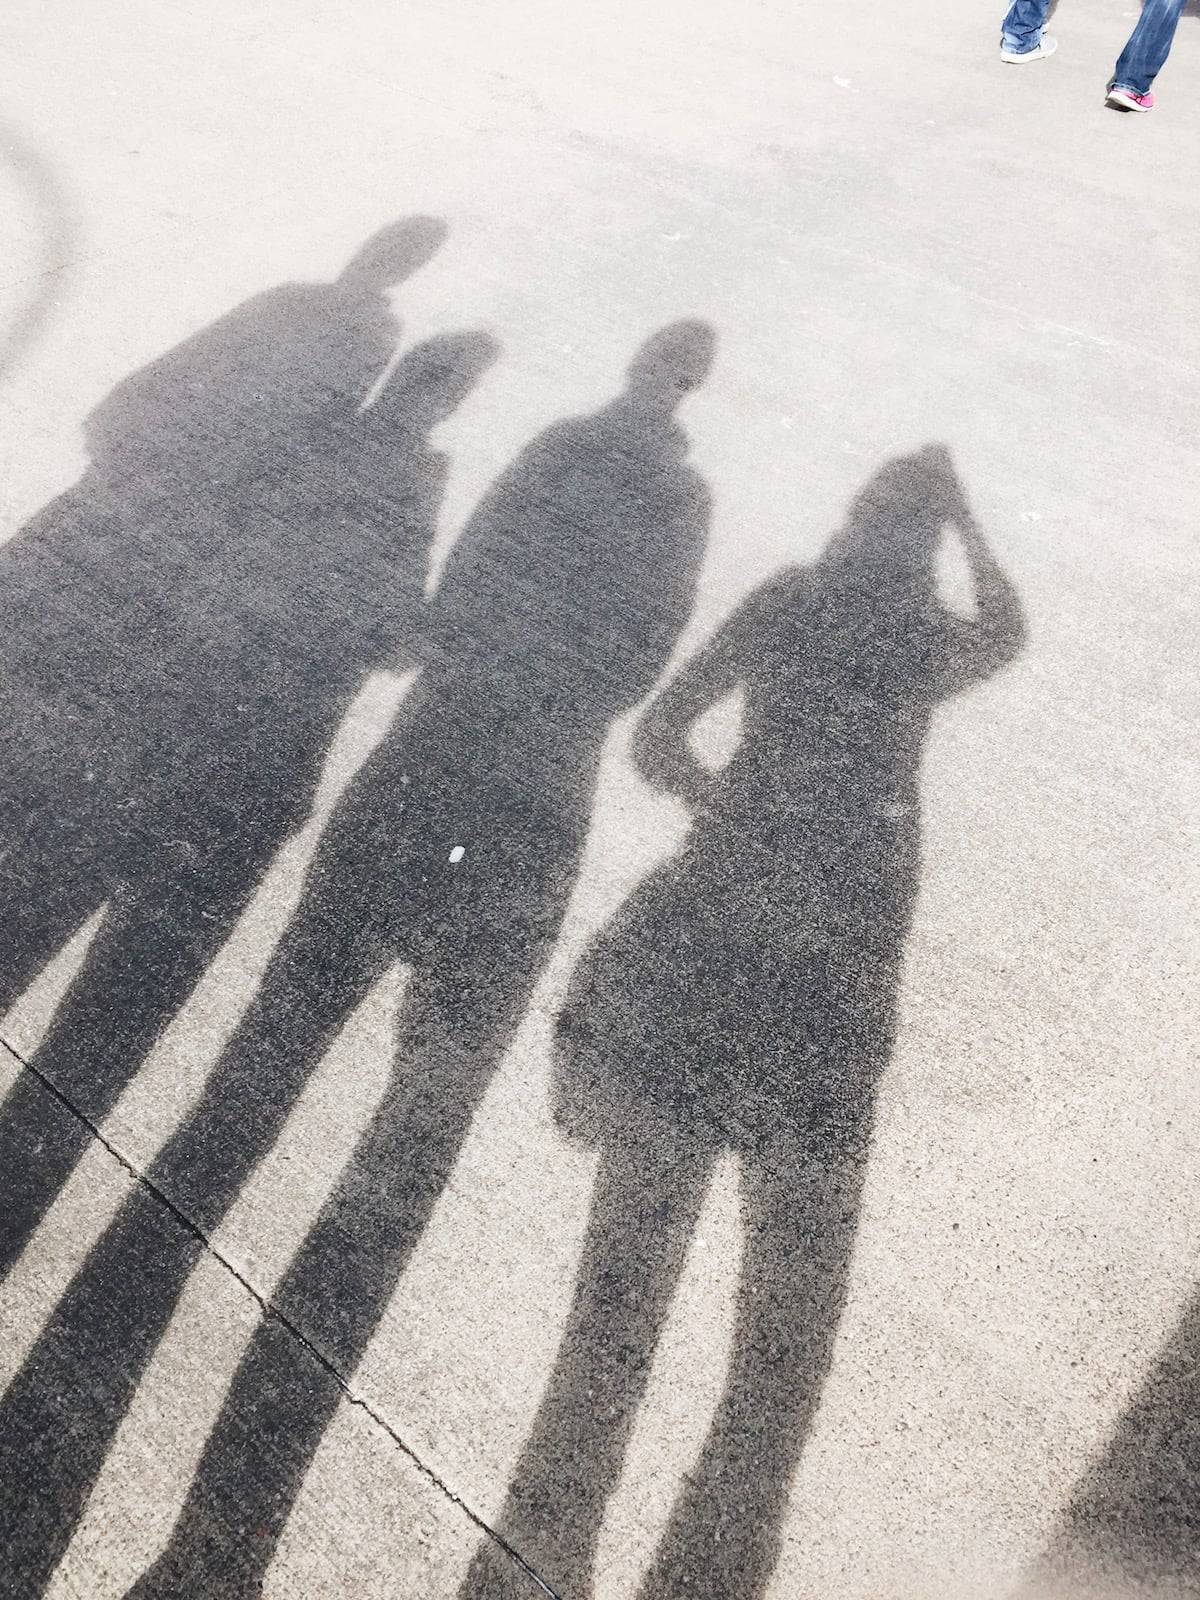 Four shadows on cement.